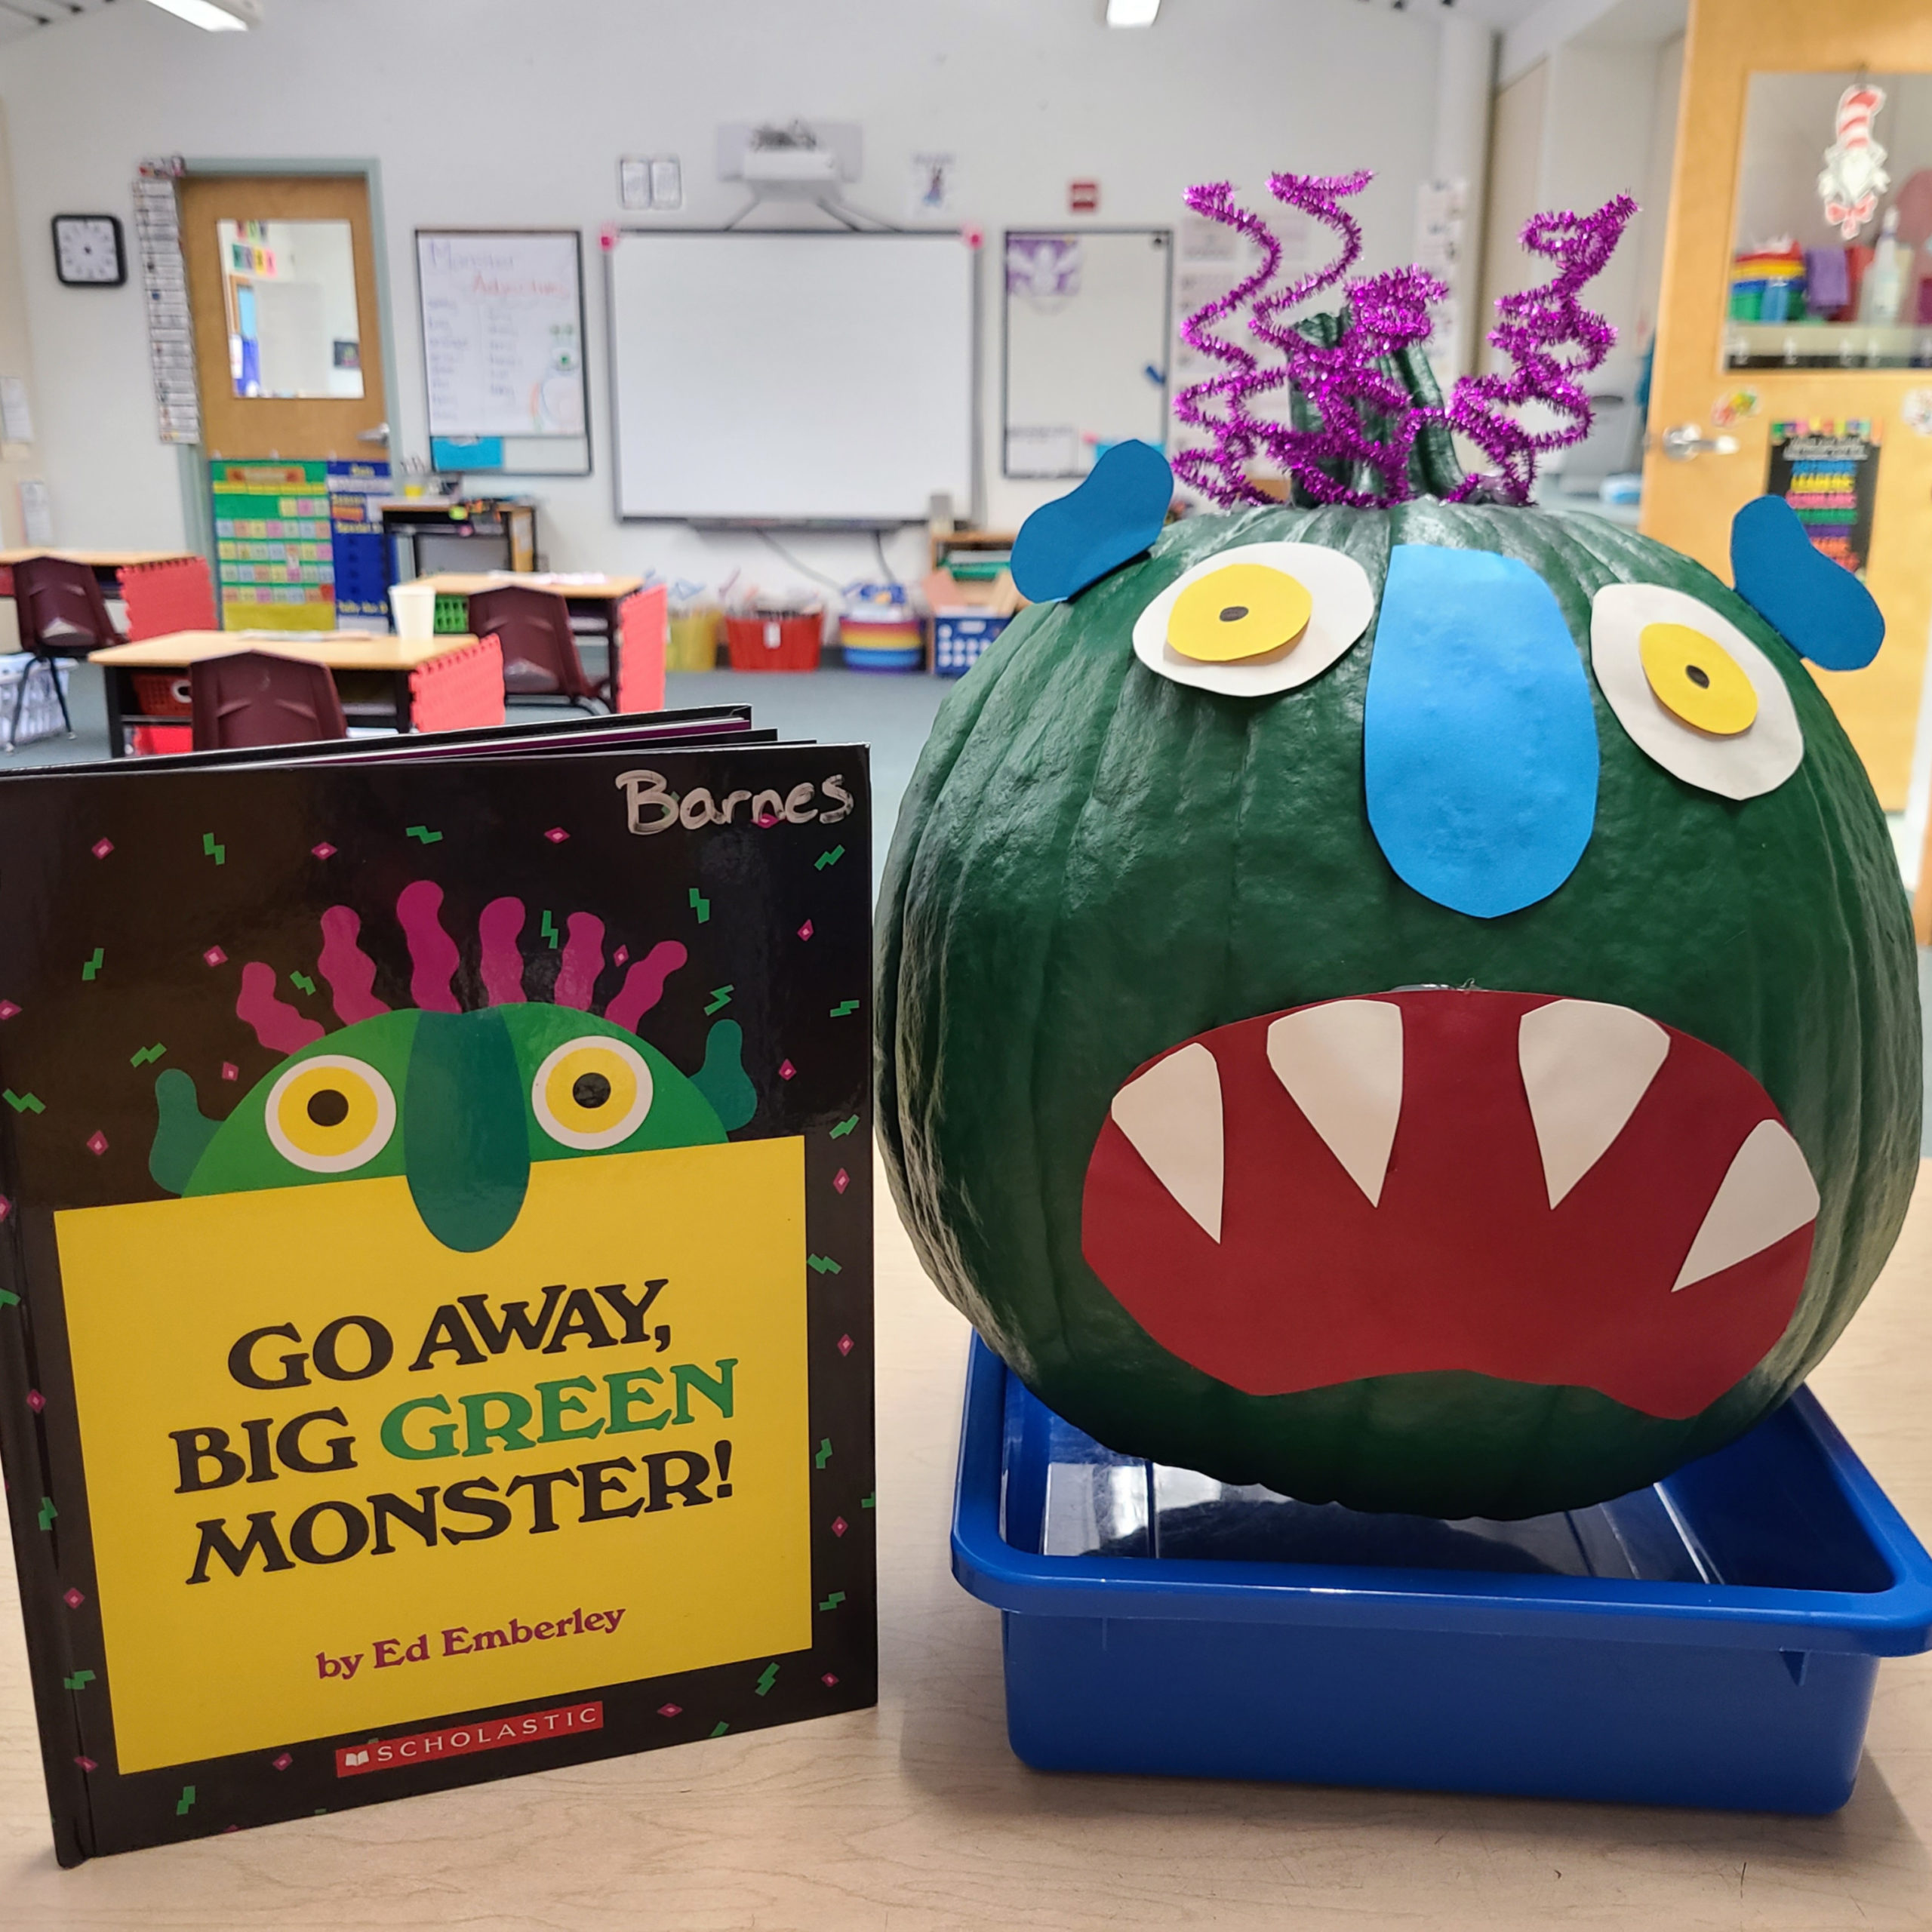 Go Away Big Green Monster! - Greenfield Elementary School